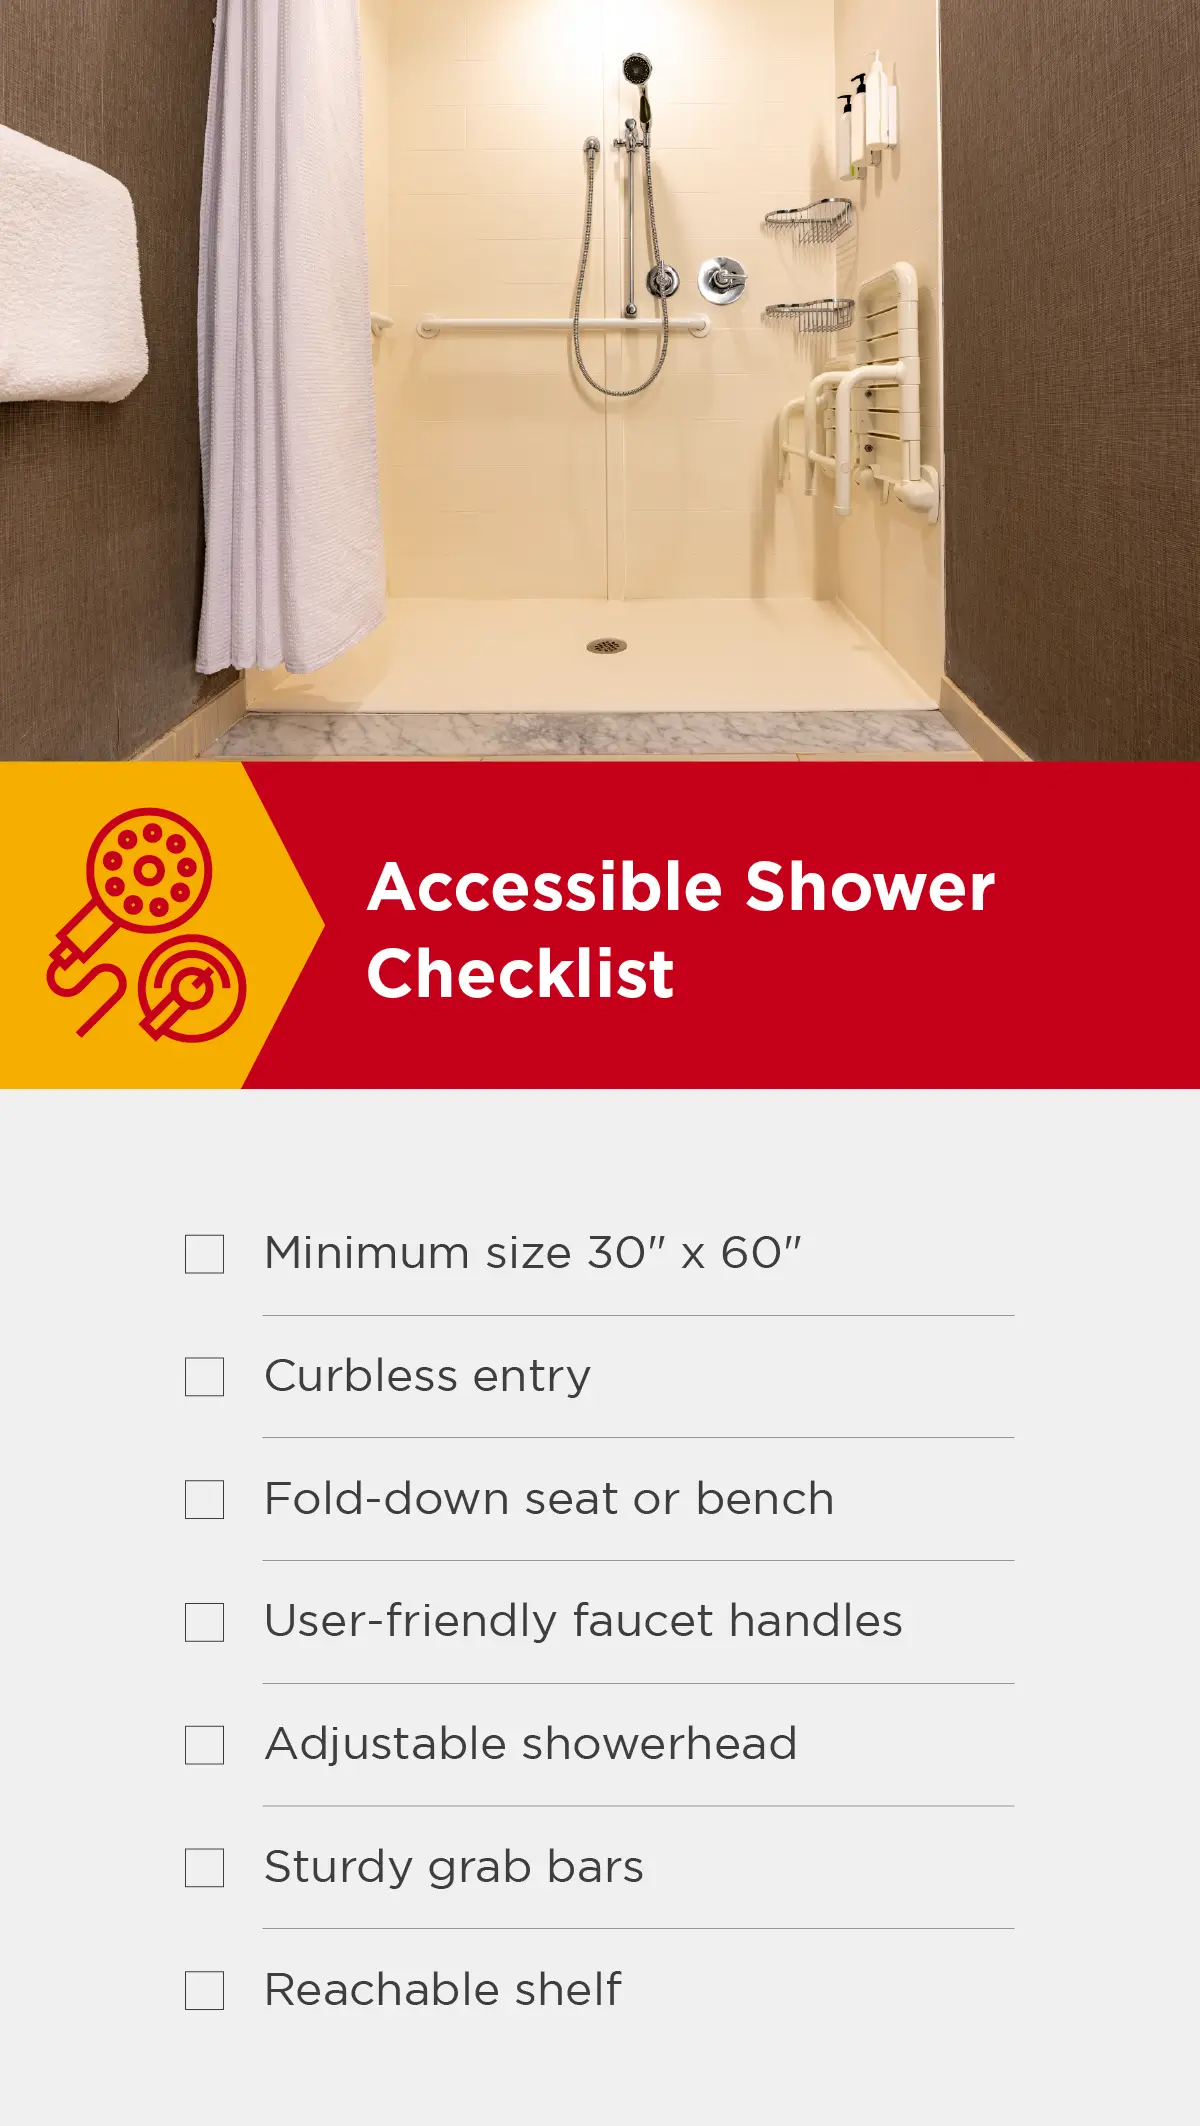 Accessible shower checklist.